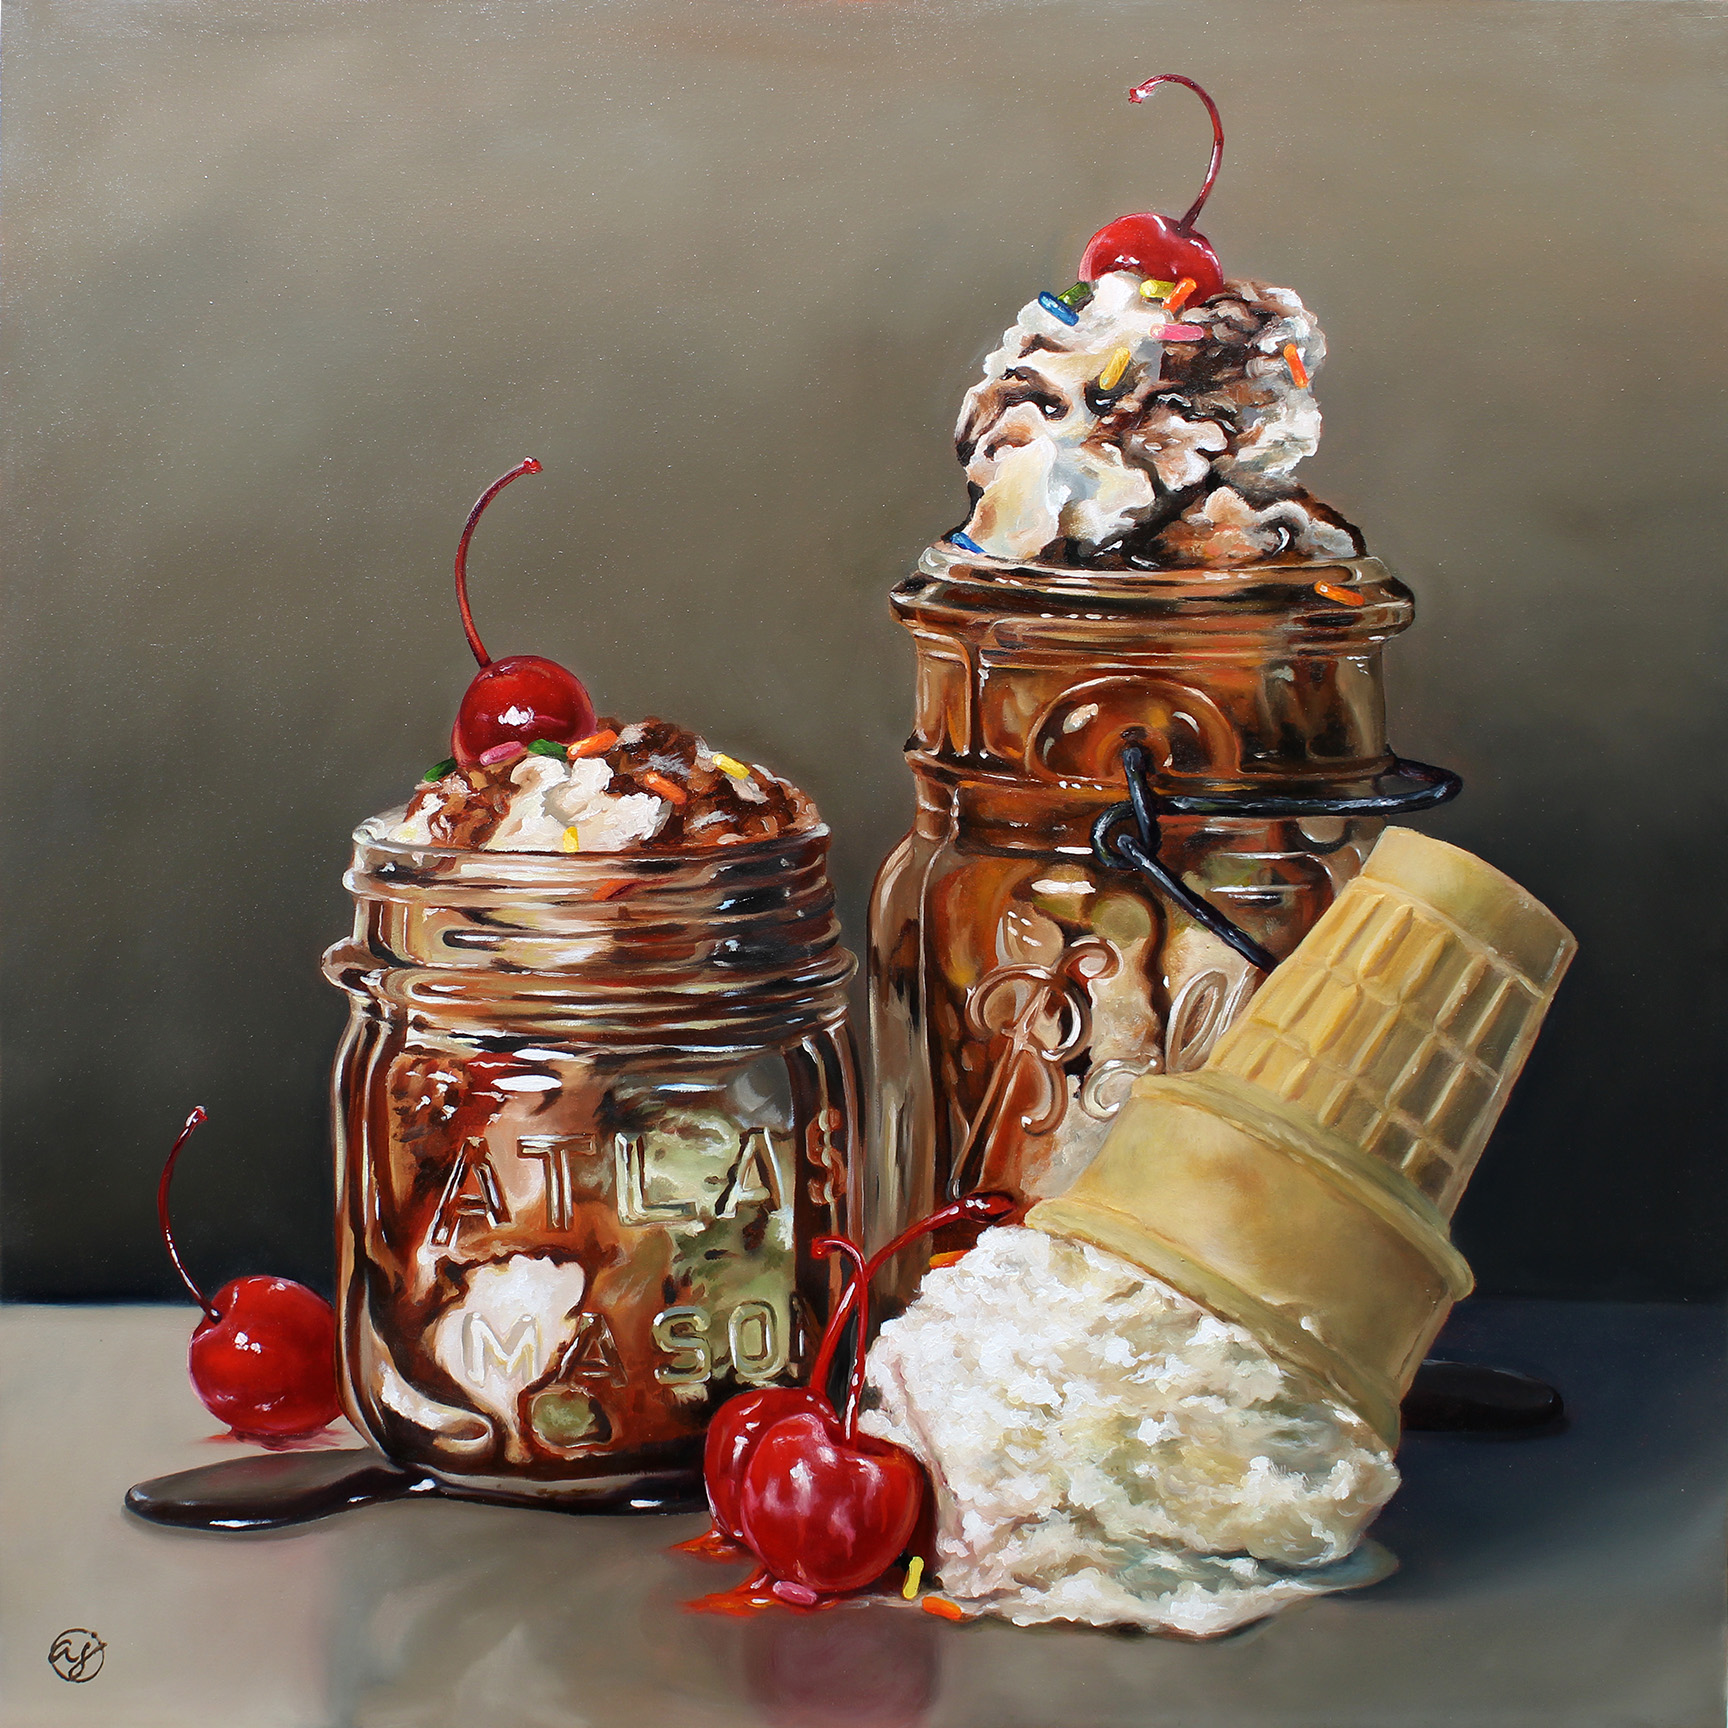 "Ice Cream Social" 24x24 Original Oil Painting by Abra Johnson